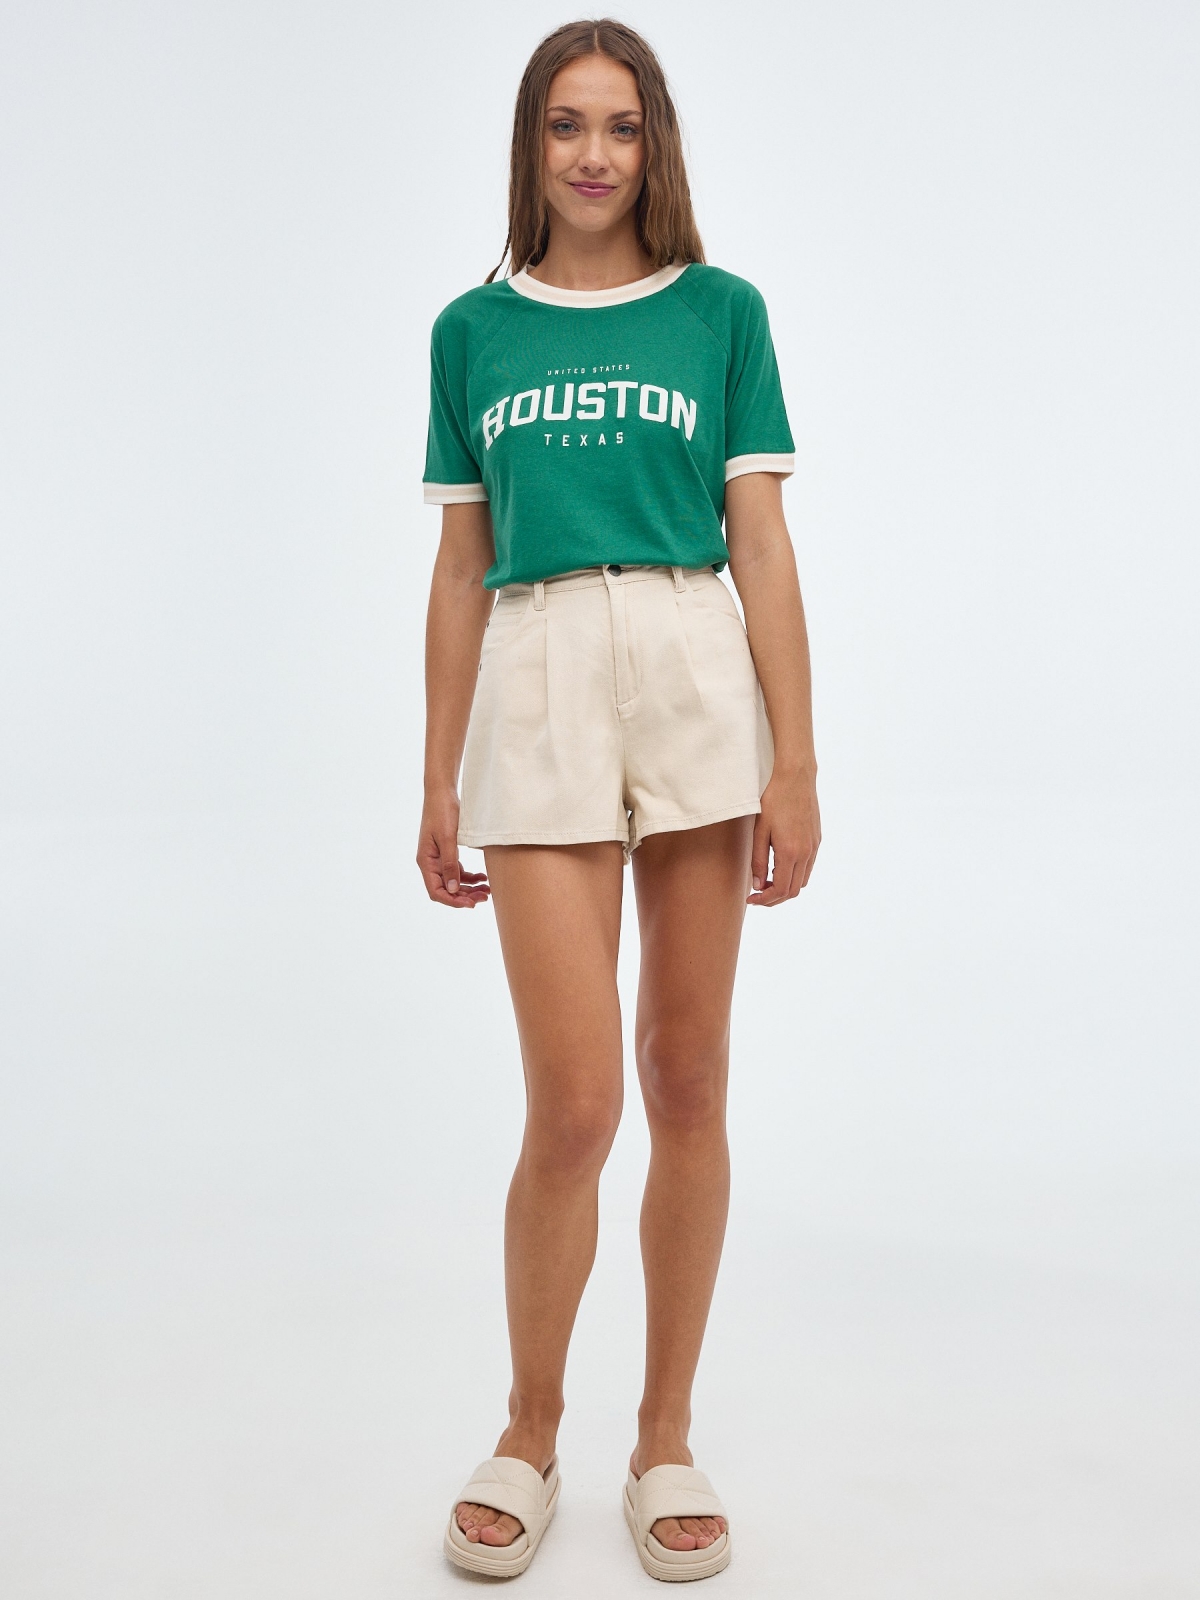 T-shirt Houston Texas verde vista geral frontal